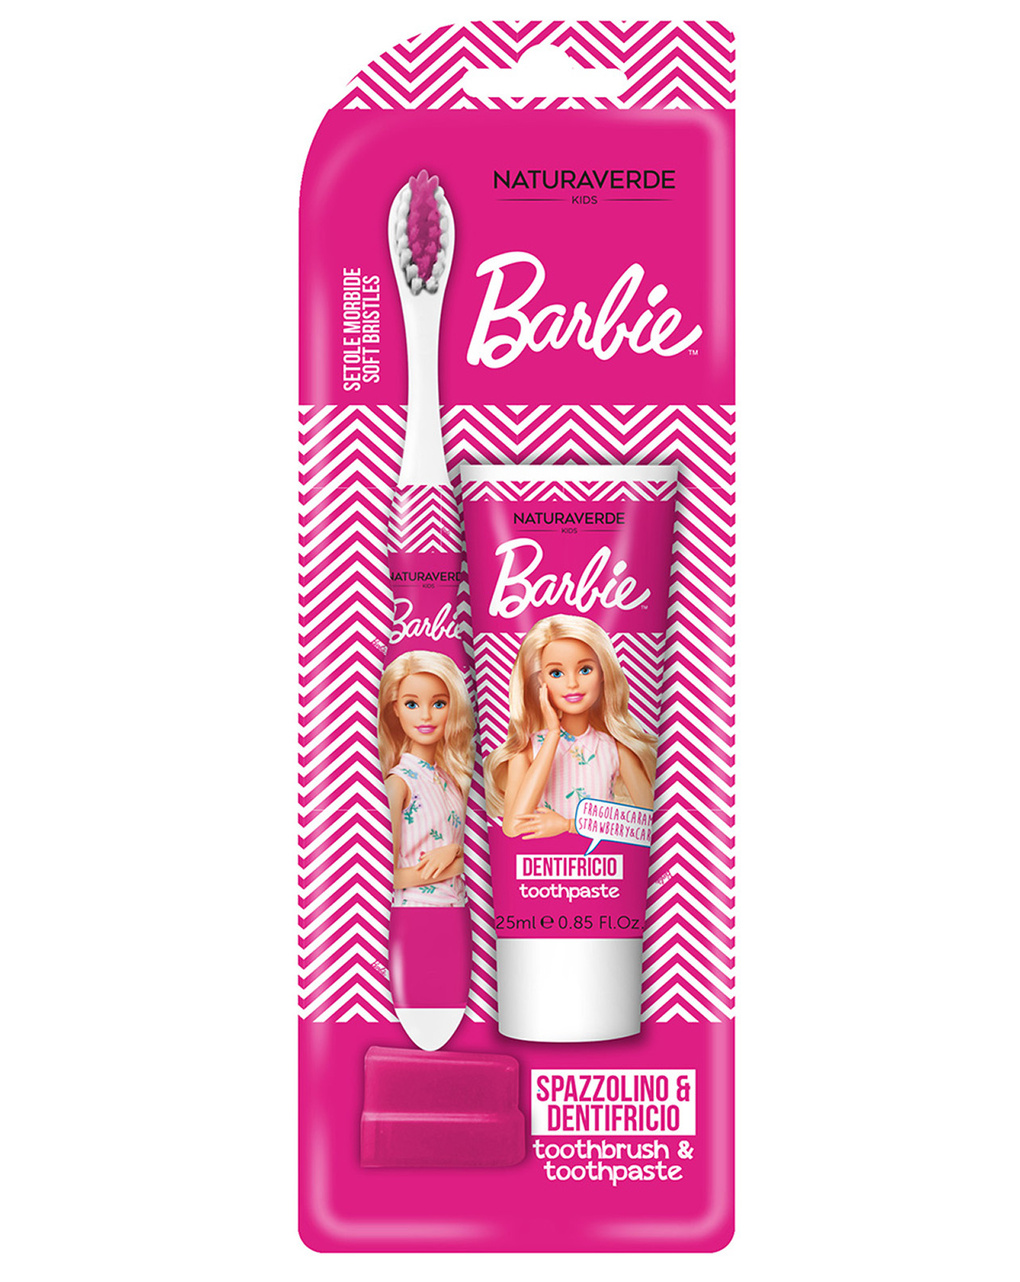 Kit oral care barbie (dentifricio 25ml + spazzolino) - naturaverde